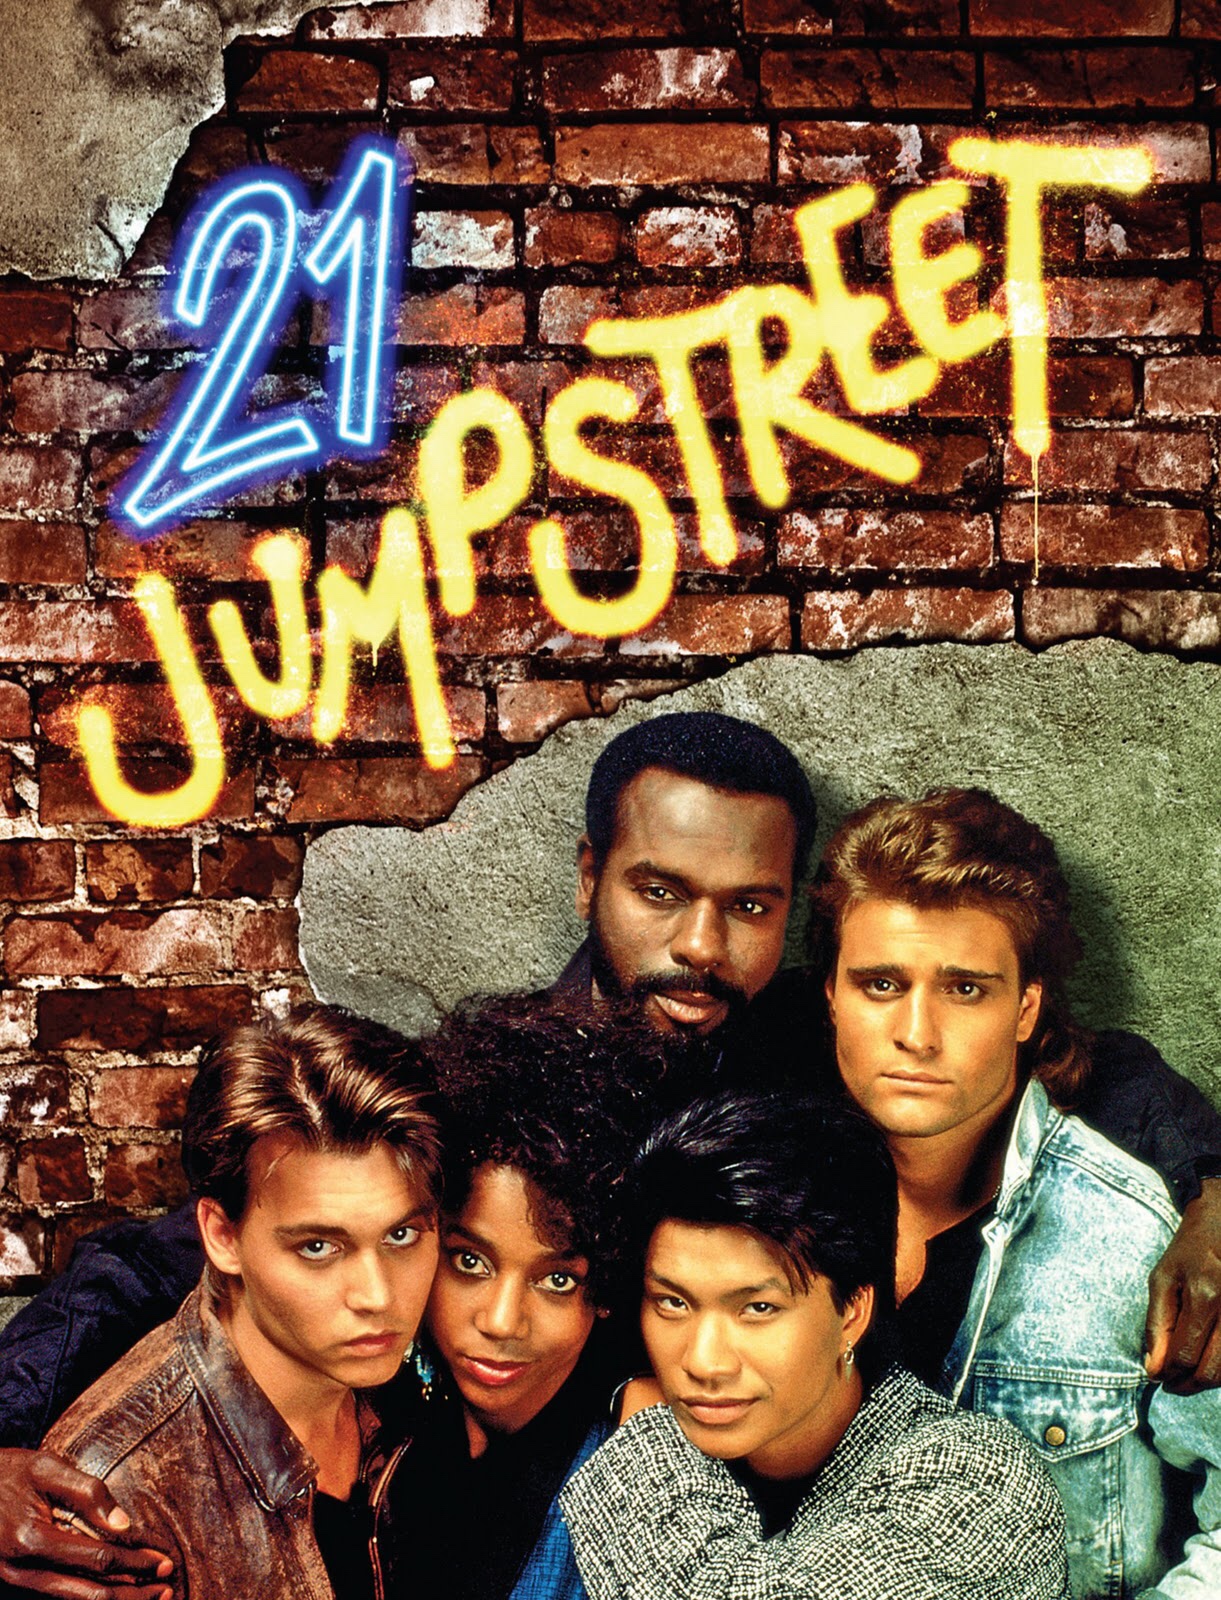 "21 jump street" (1987)